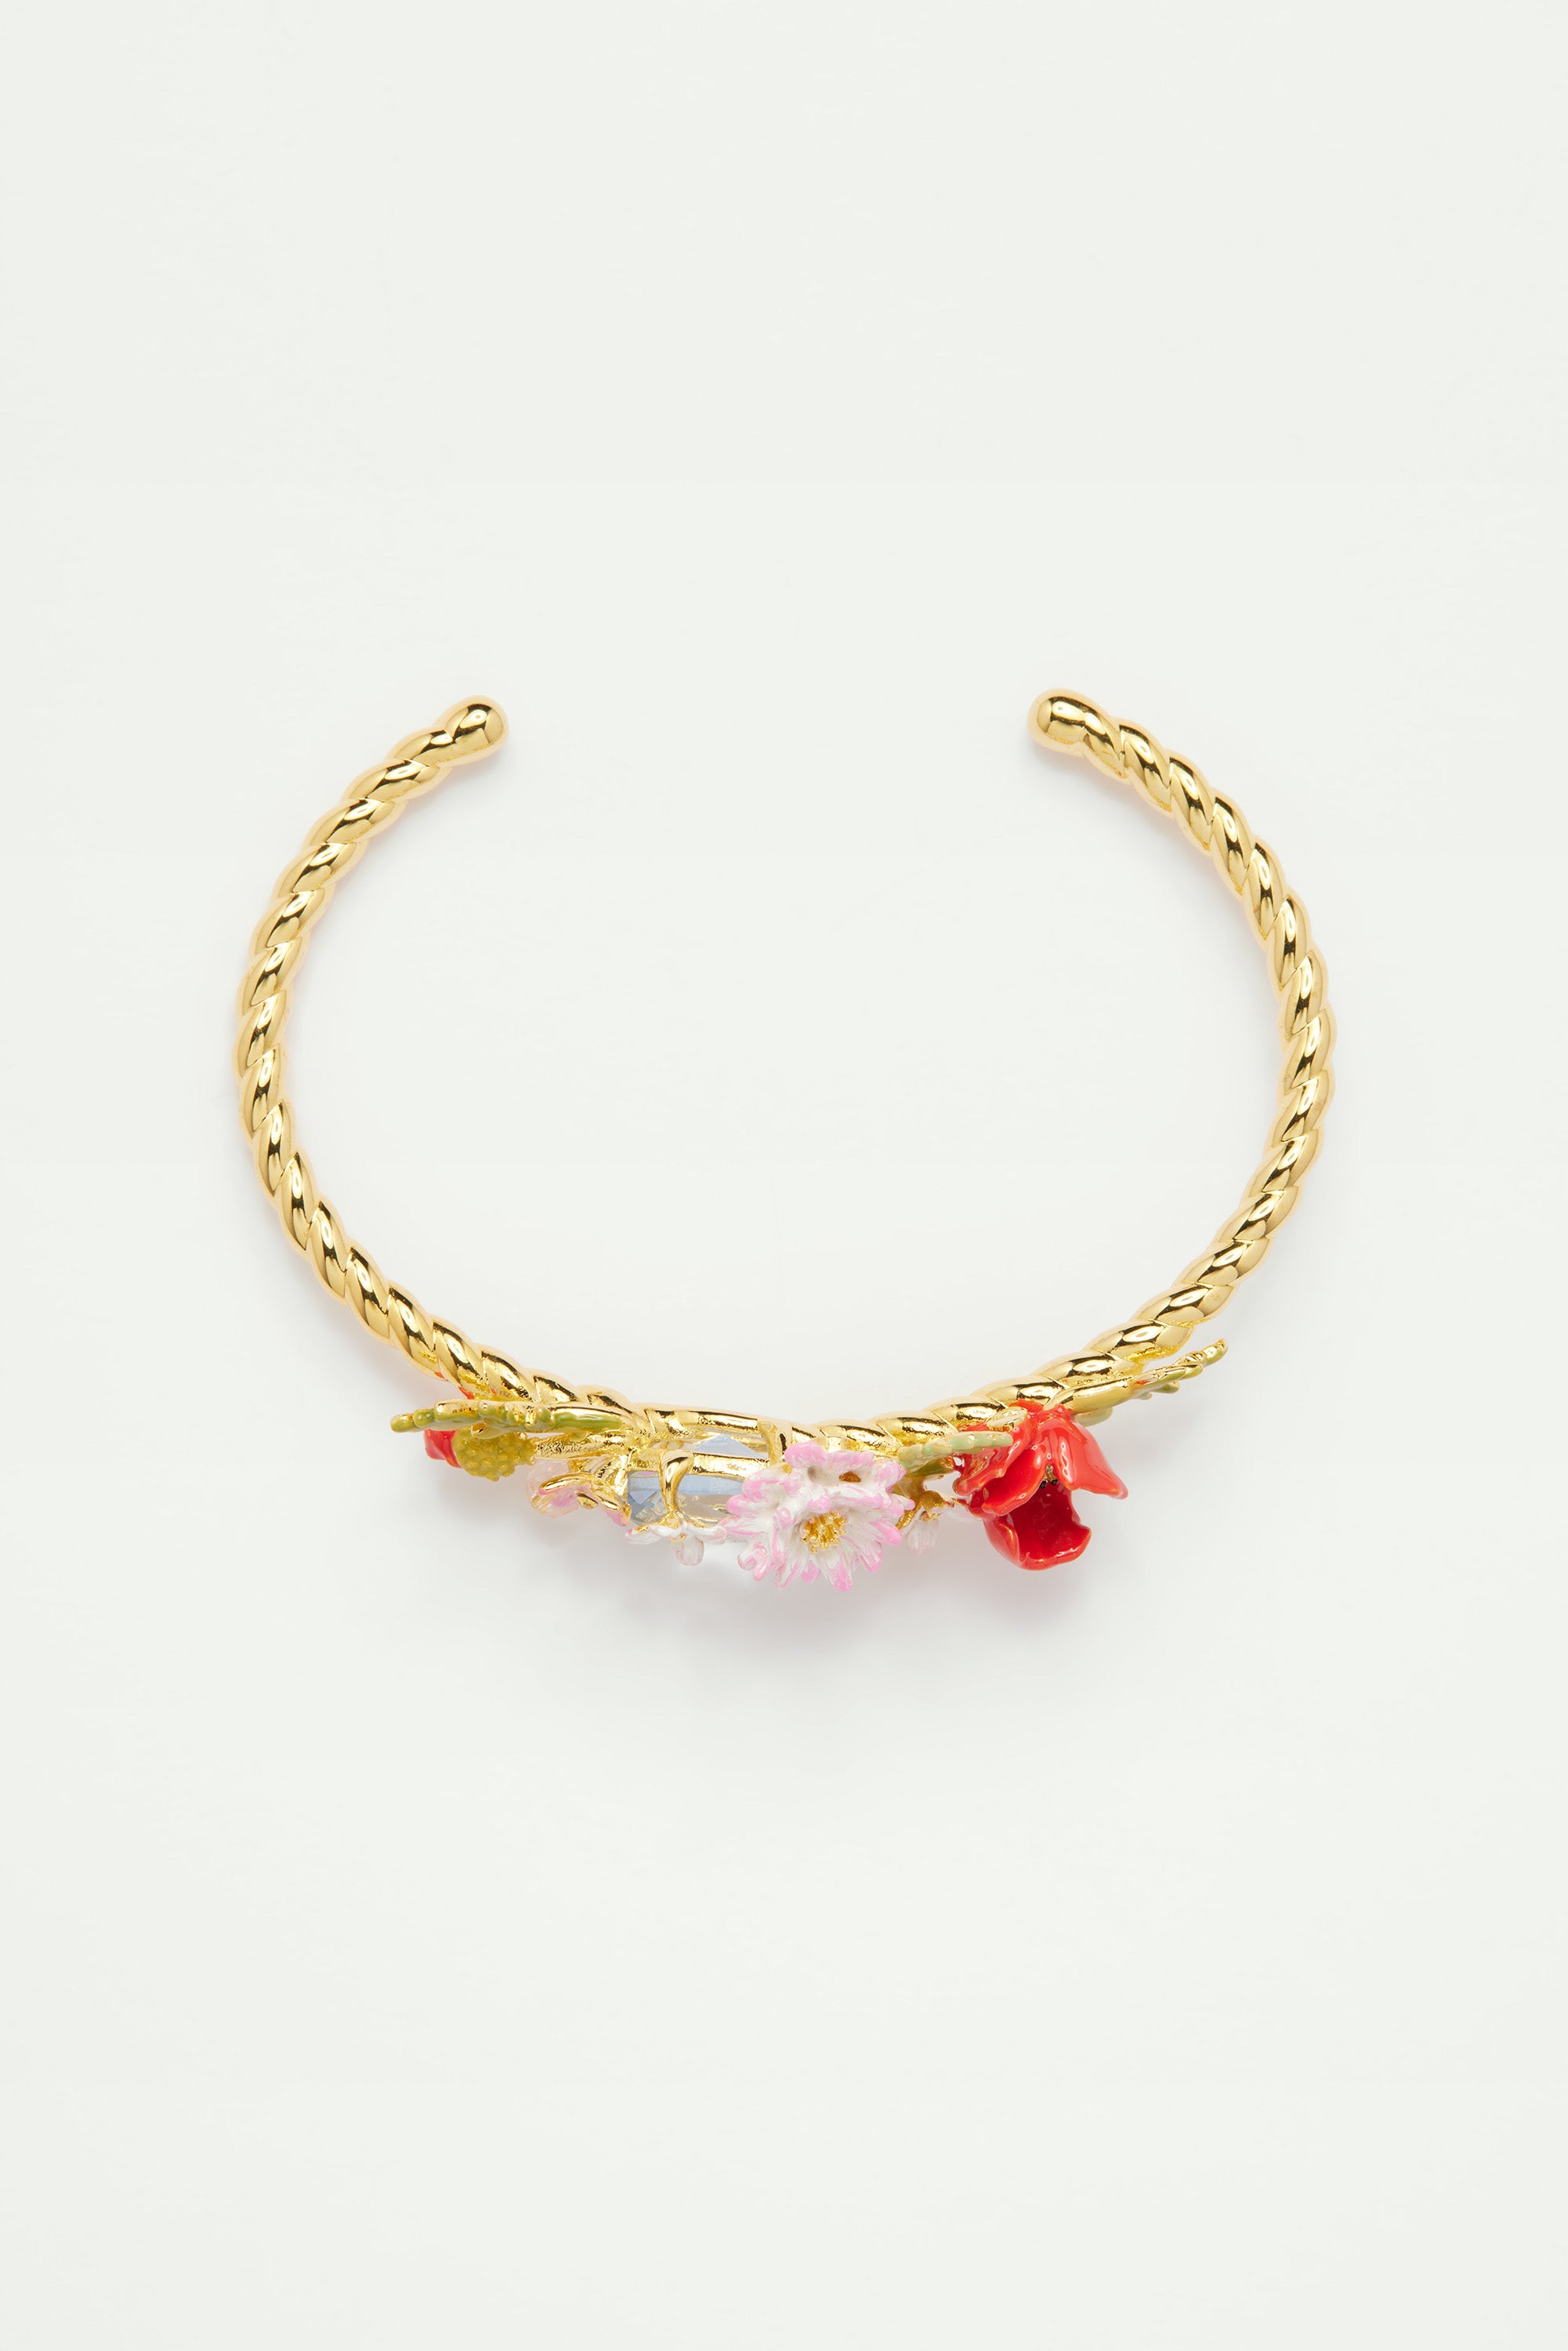 Poppy, daisy and blue cut glass stone bangle bracelet